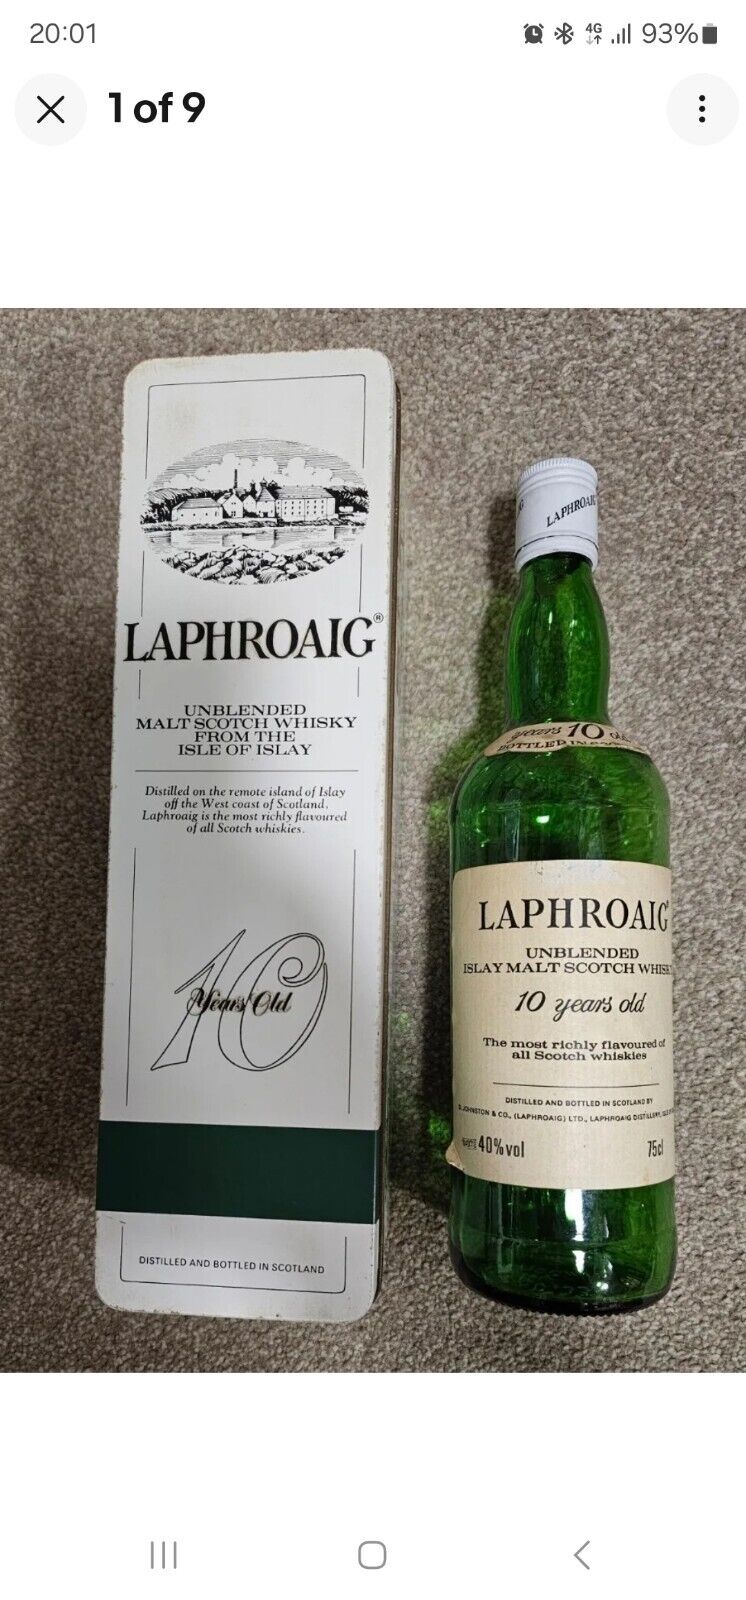 Laphroaig 10 year old (EMPTY) pre-Royal Warrant single malt whisky bottle + Box